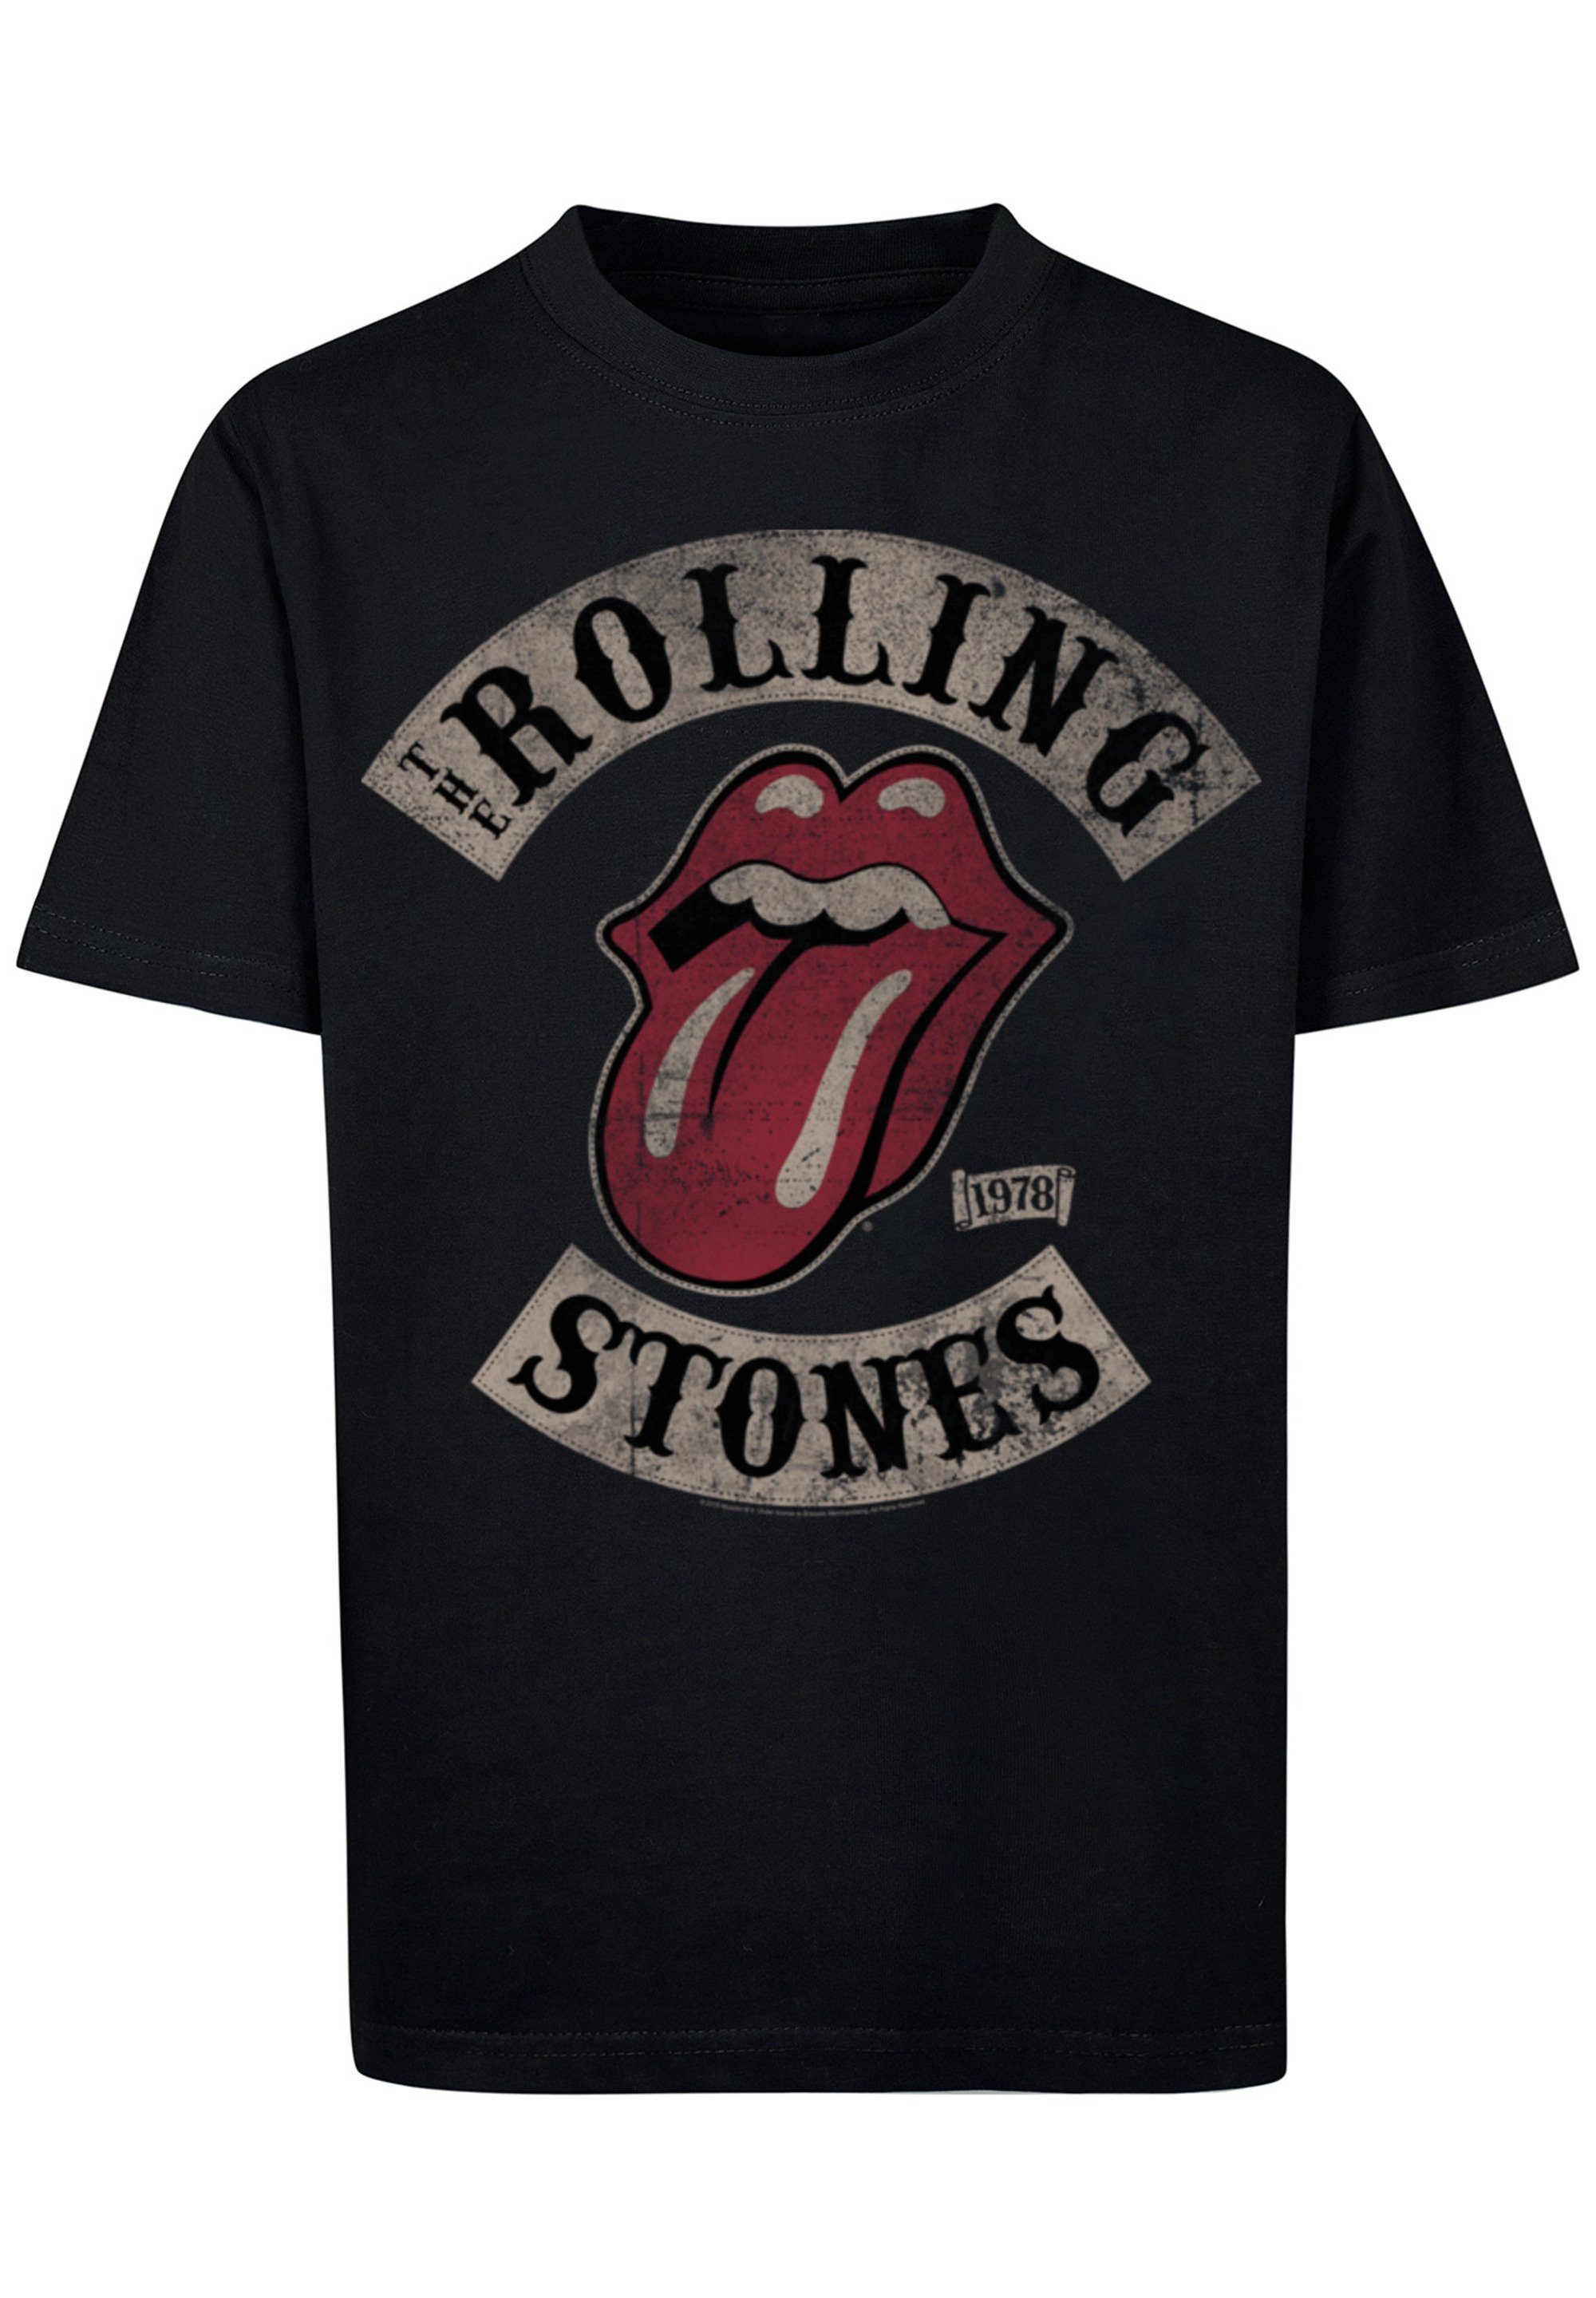 F4NT4STIC T-Shirt The Rolling Stones Rockband Tour \'78 Black Print, Sehr  weicher Baumwollstoff mit hohem Tragekomfort